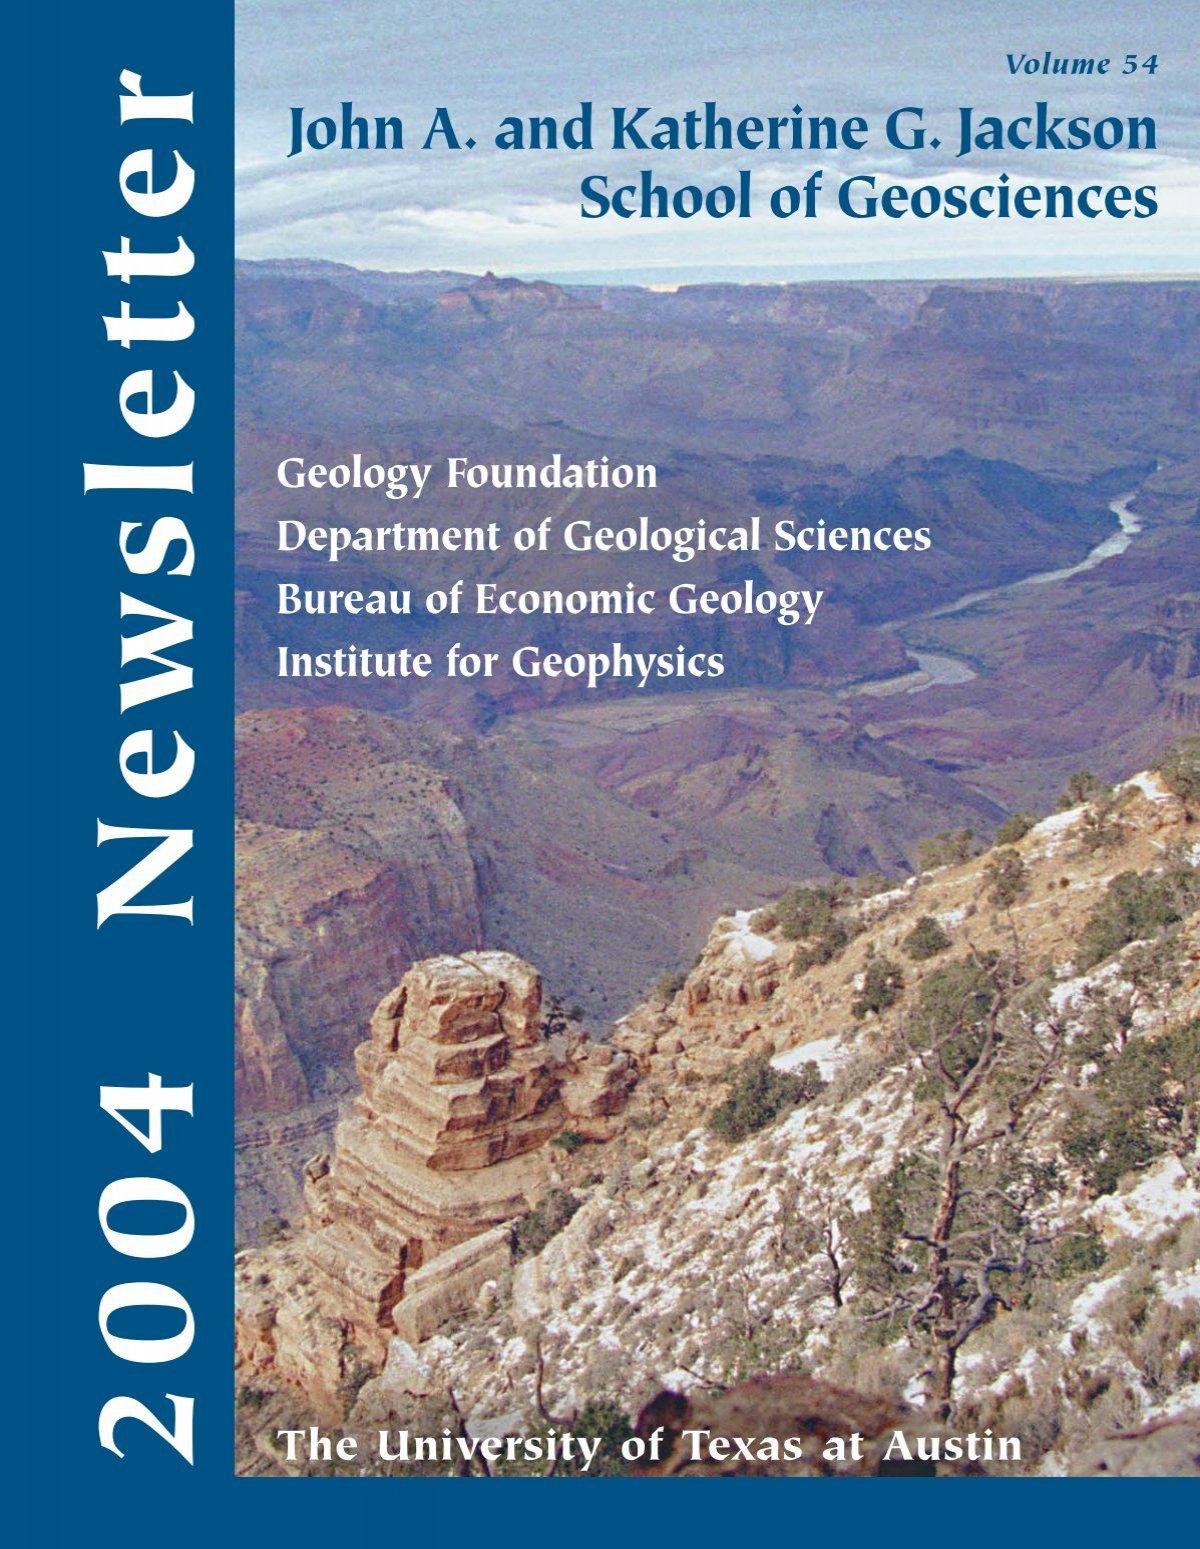 JSG newsletter04 final.pmd - Jackson School of Geosciences - The